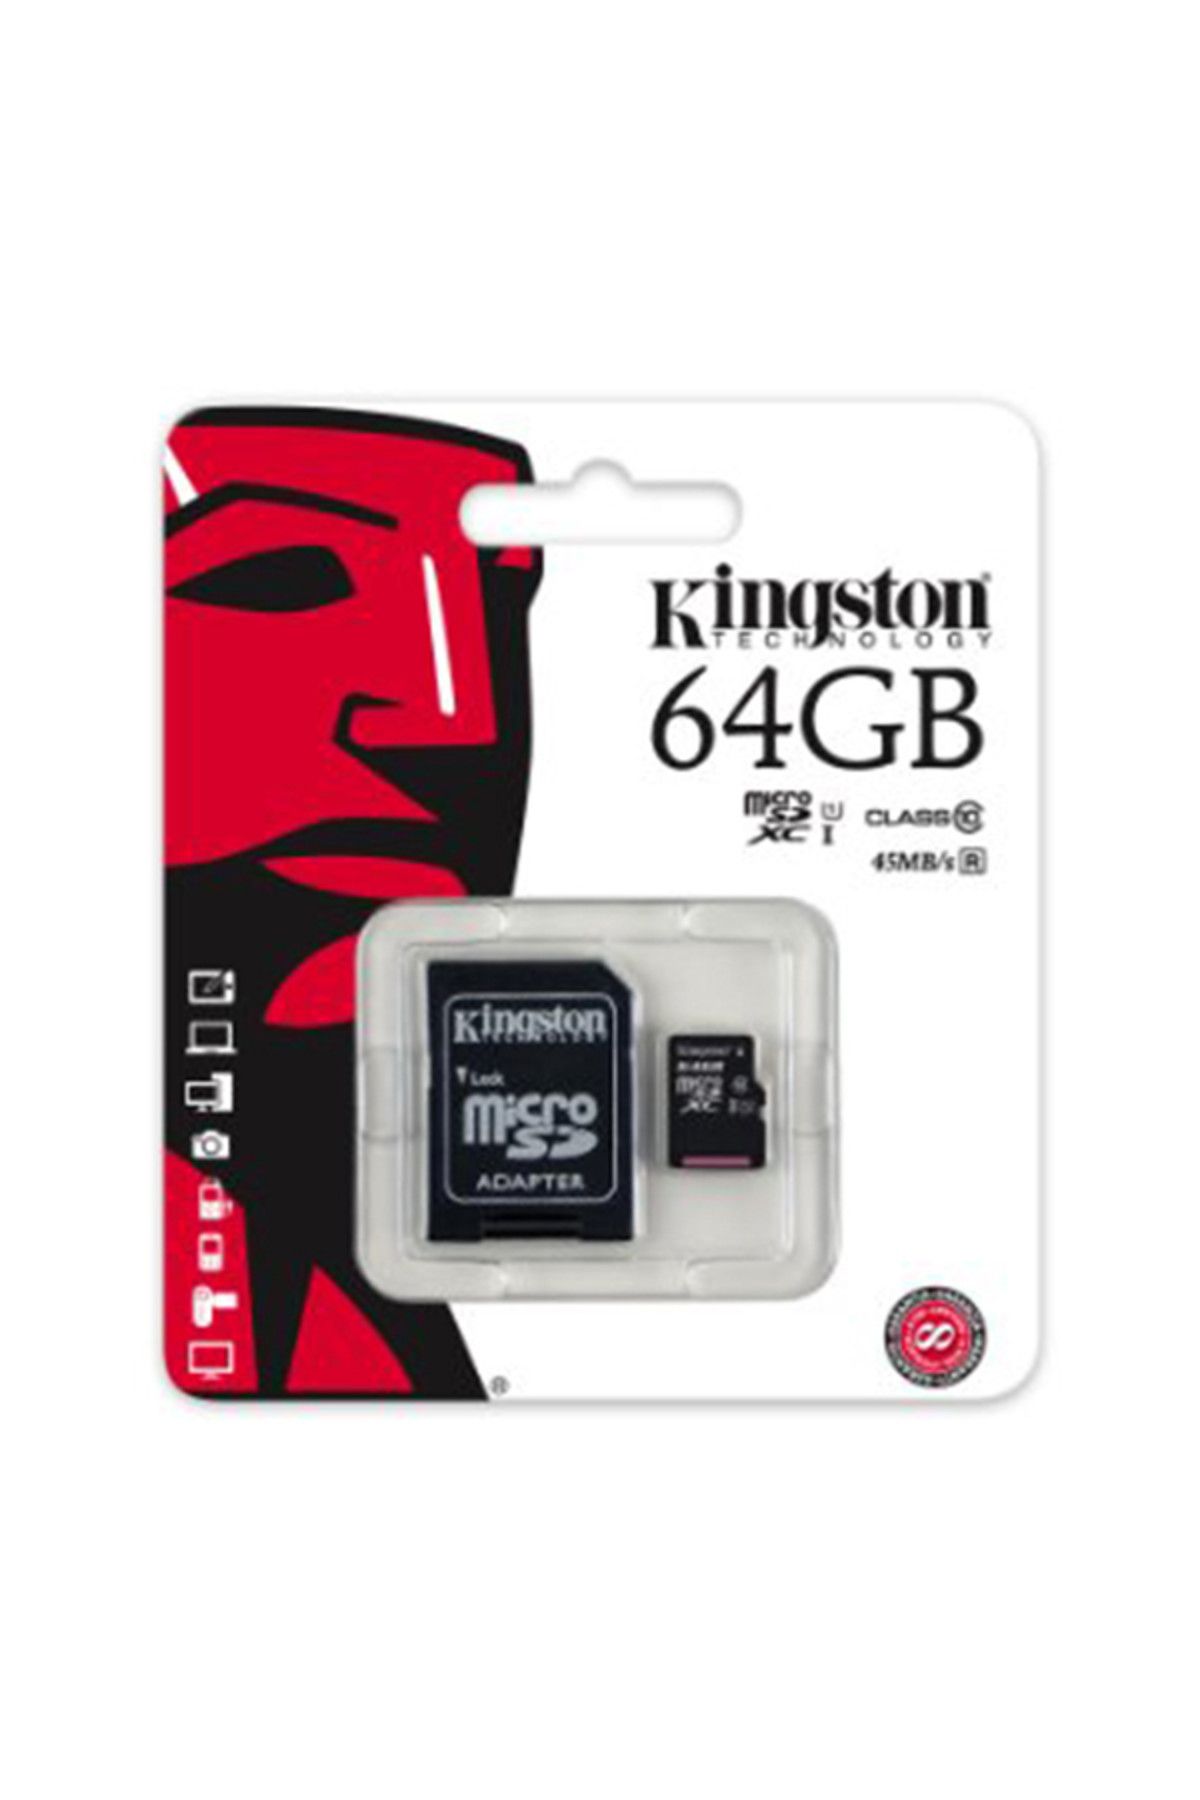 Kingston 64GB MicroSD CL10 SDC10G2/64GB KINGSTON